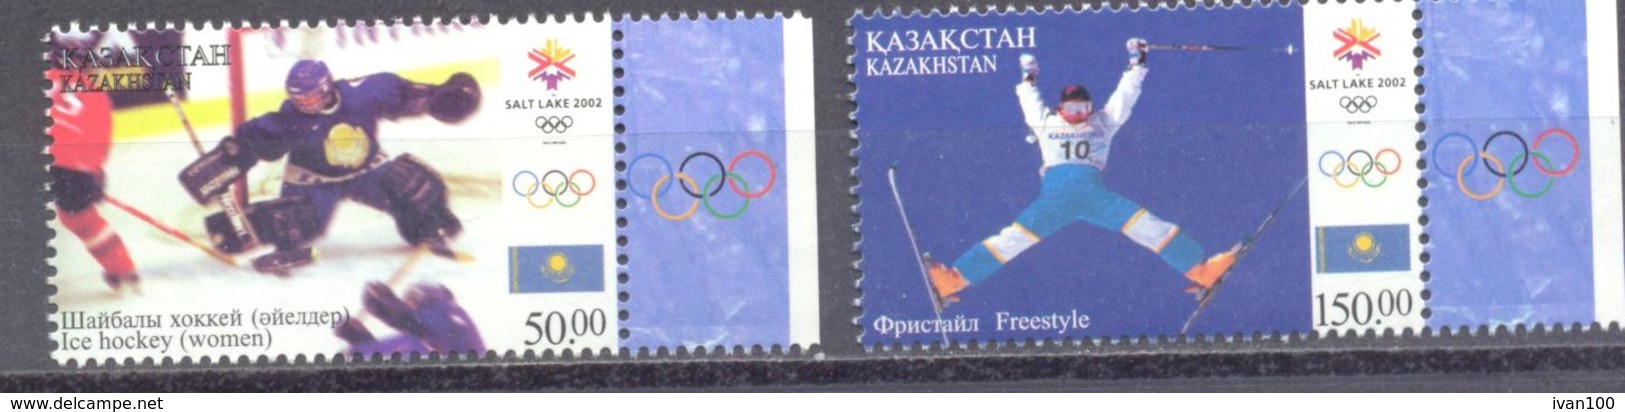 2002. Kazakhstan, Winter Olympic Games Salt Lake City, 2v,  Mint/** - Kazakhstan